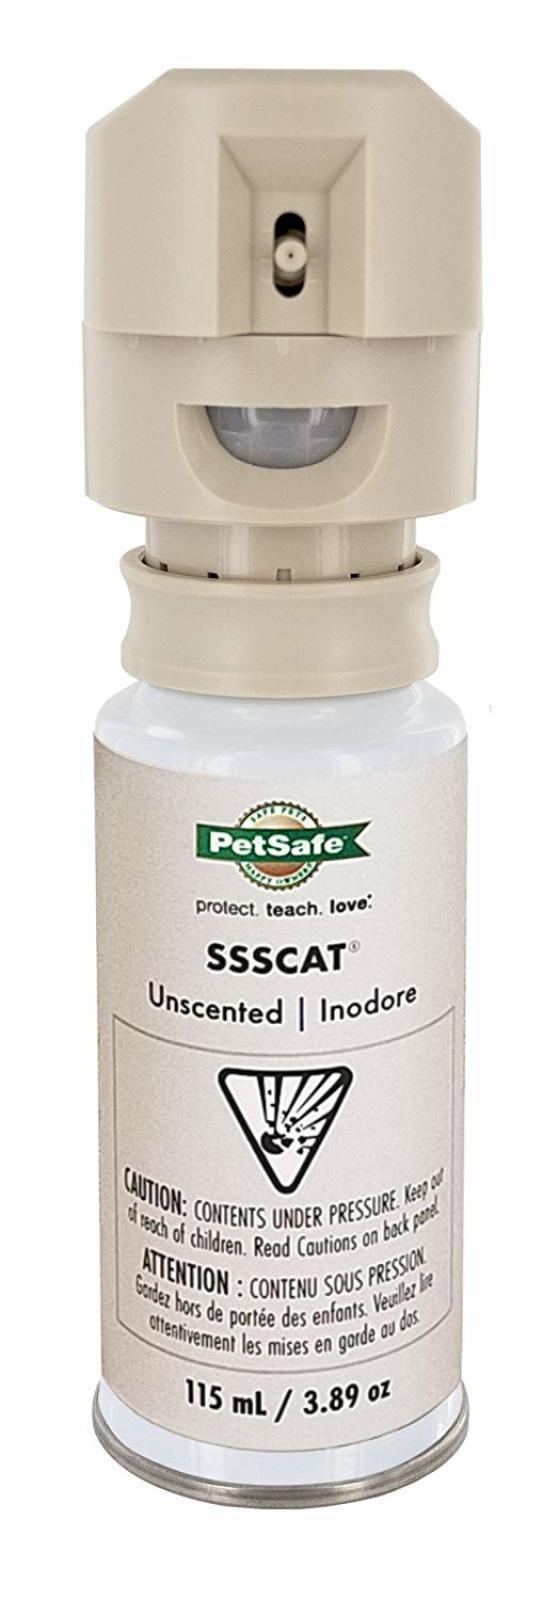 PetSafe SSSCAT Spray Pet Deterrent, Motion Activated Pet Proofing Repellent New